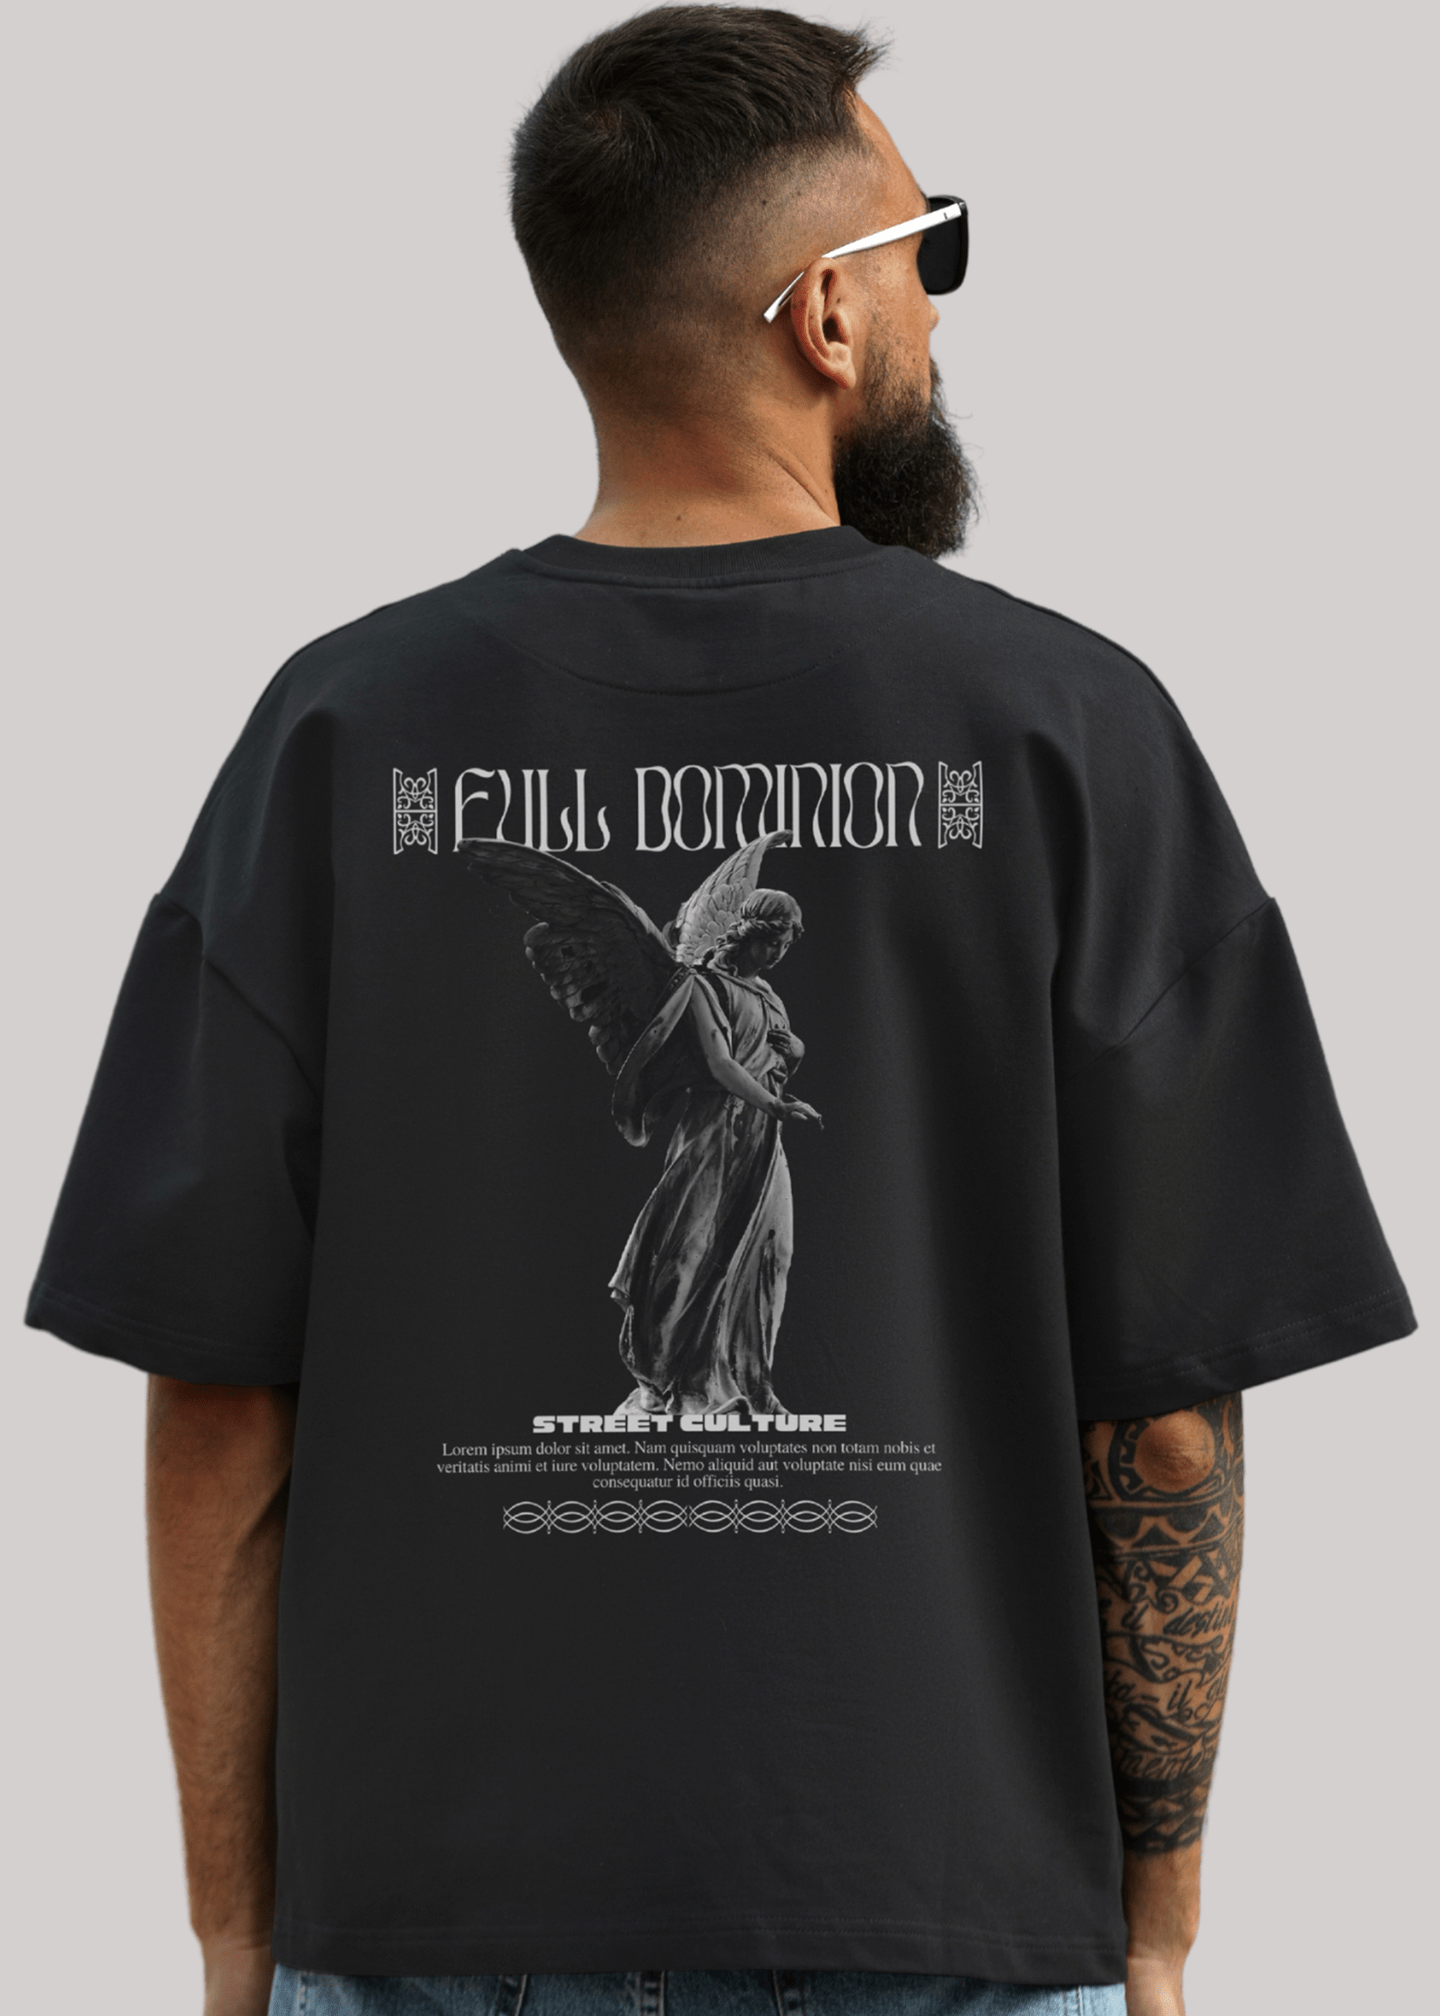 Darooon Unisex Full domination Graphic Printed Black Oversize T-shirt